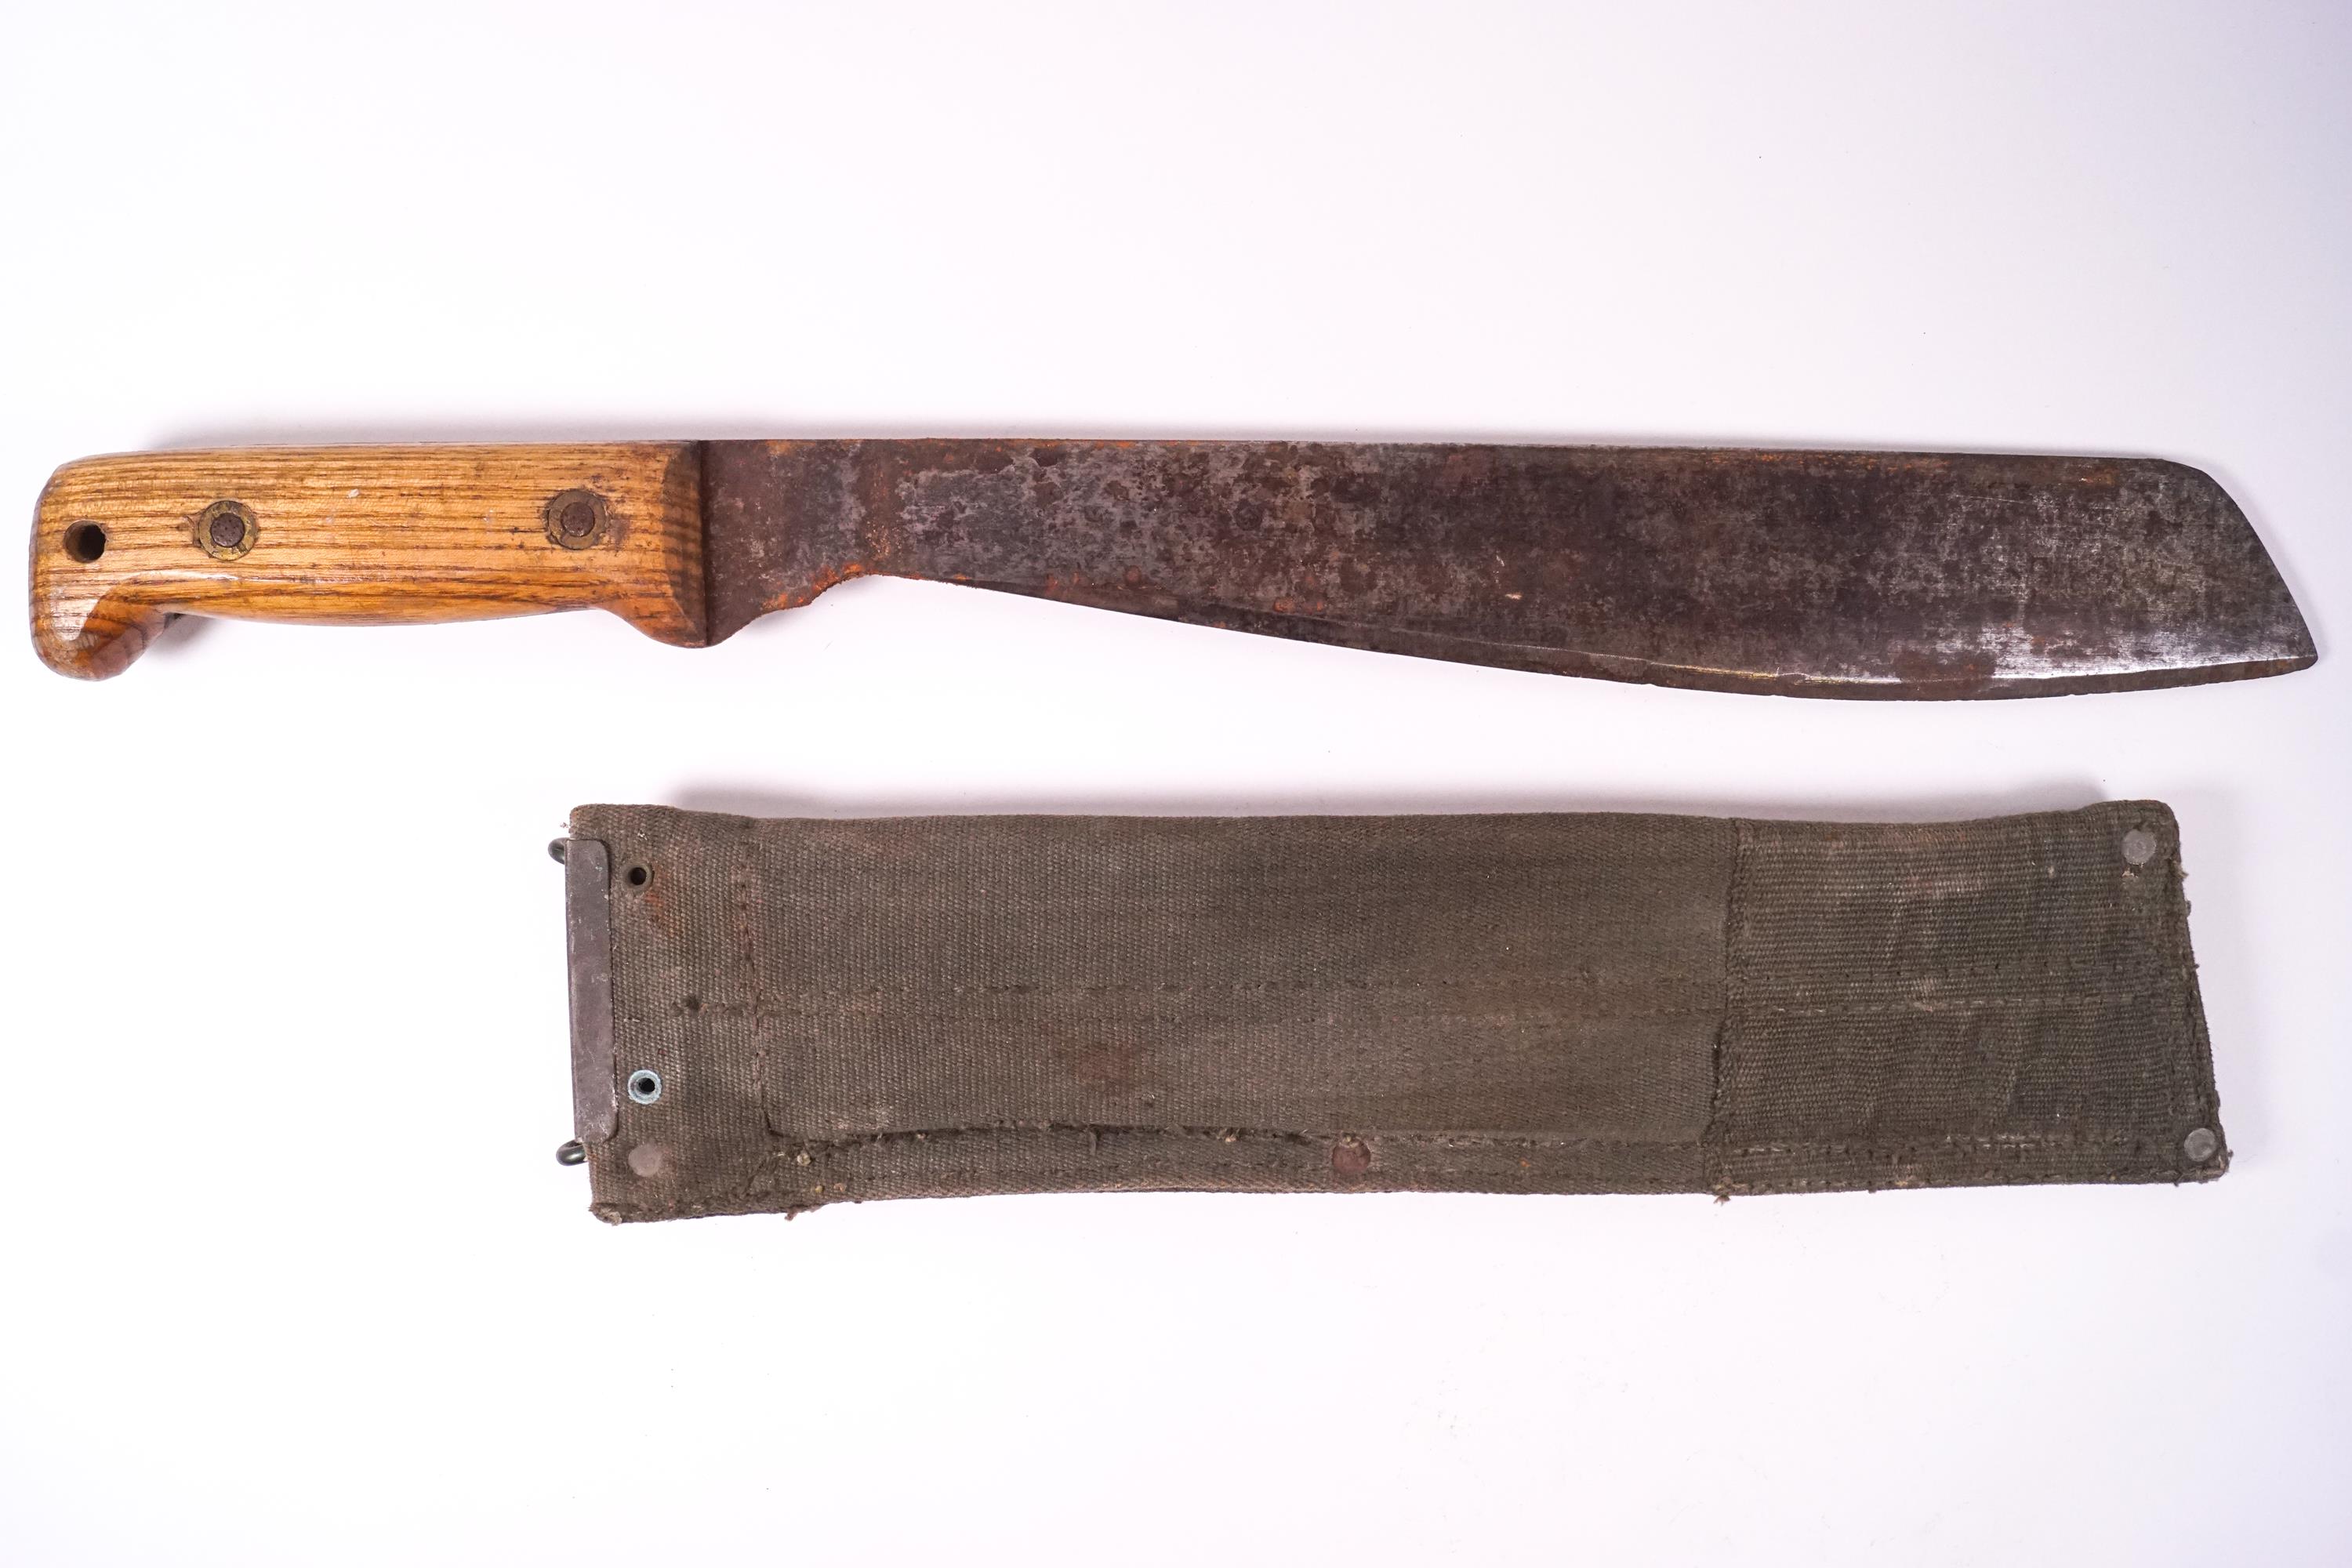 A British Army machete with sheath, numbered 4048 MECO 1956 KE 18732 to the sheath,